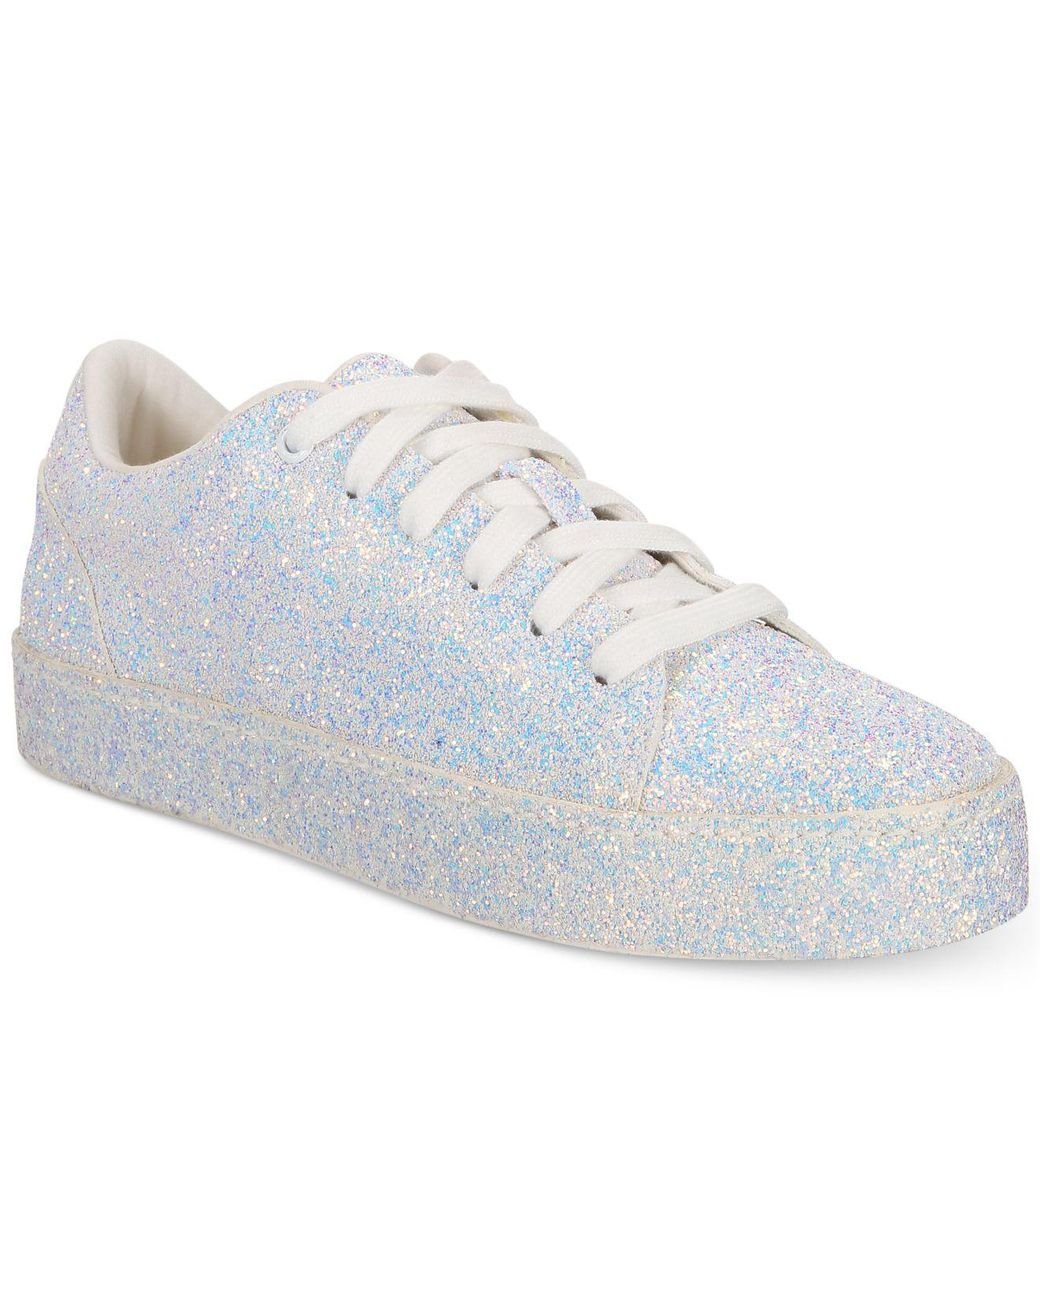 Aldo Women's White Glitter Casual Sneakers Sz 9 Brand New